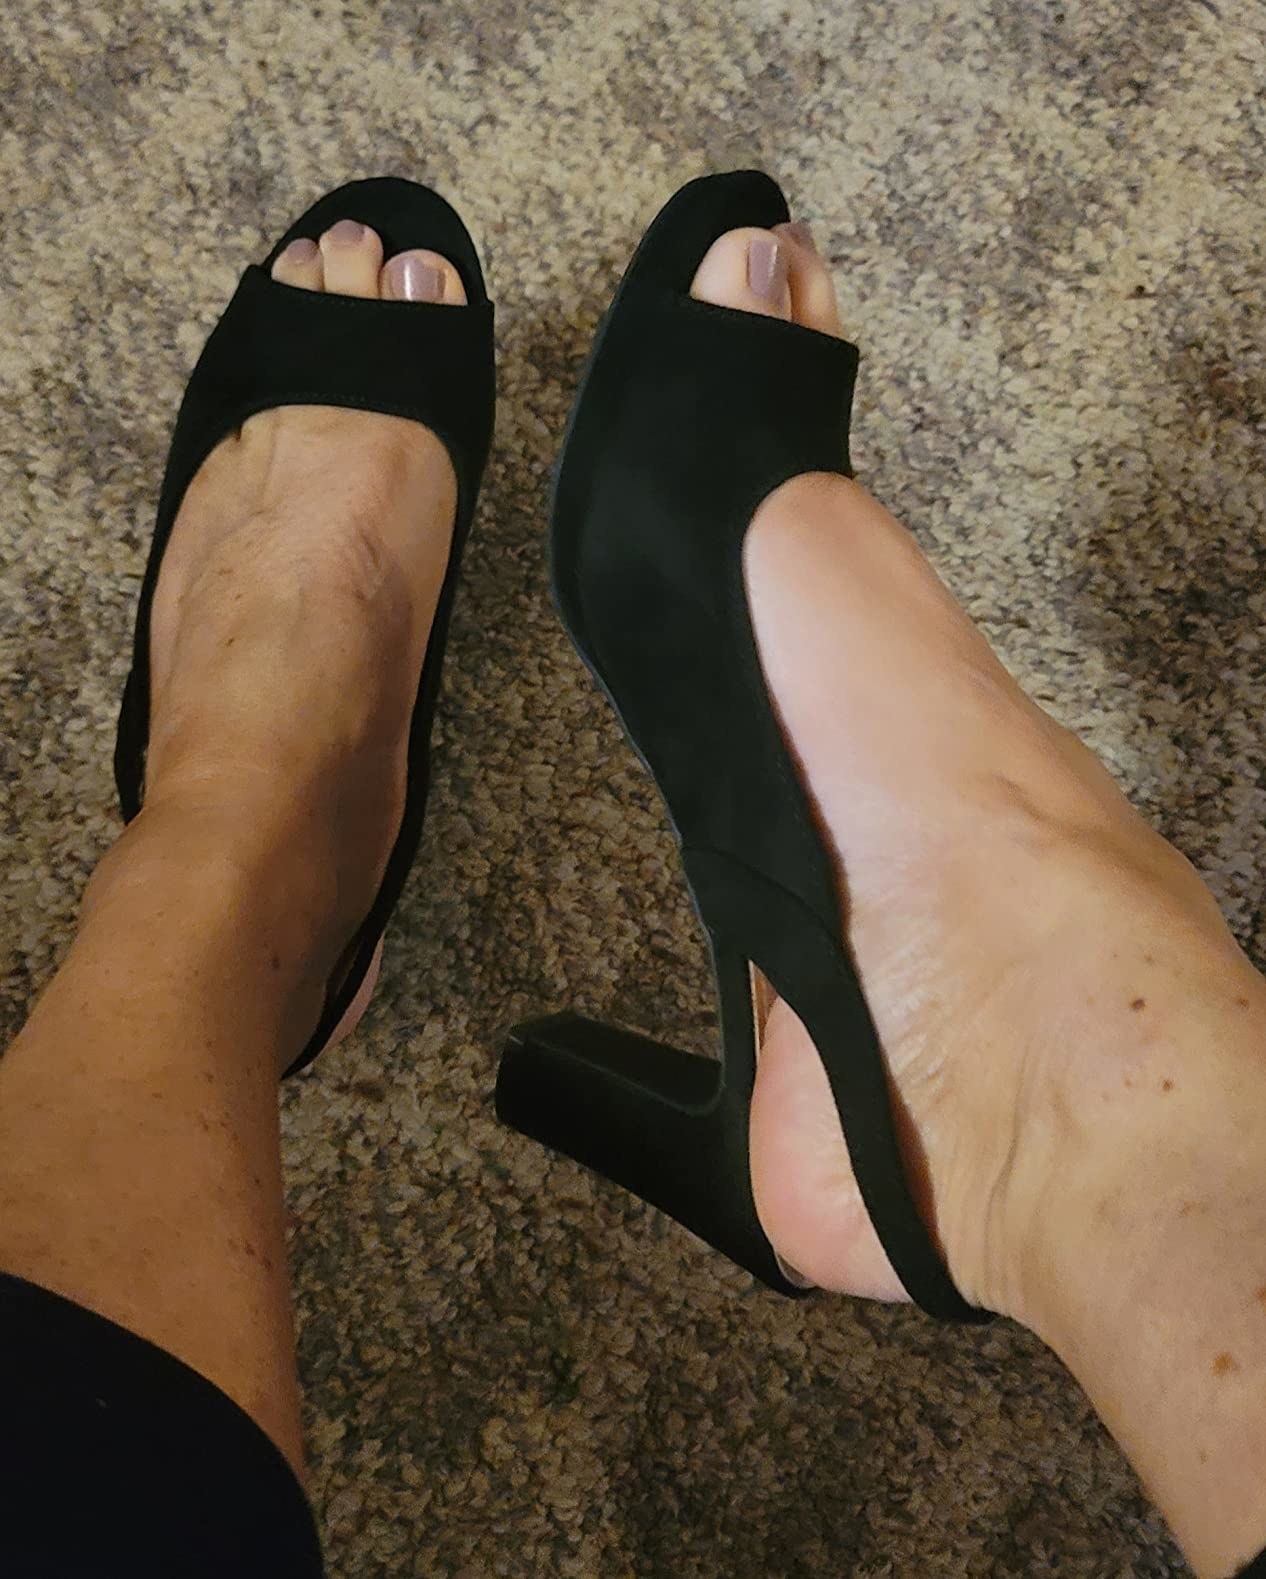 A reviewer wearing black heels